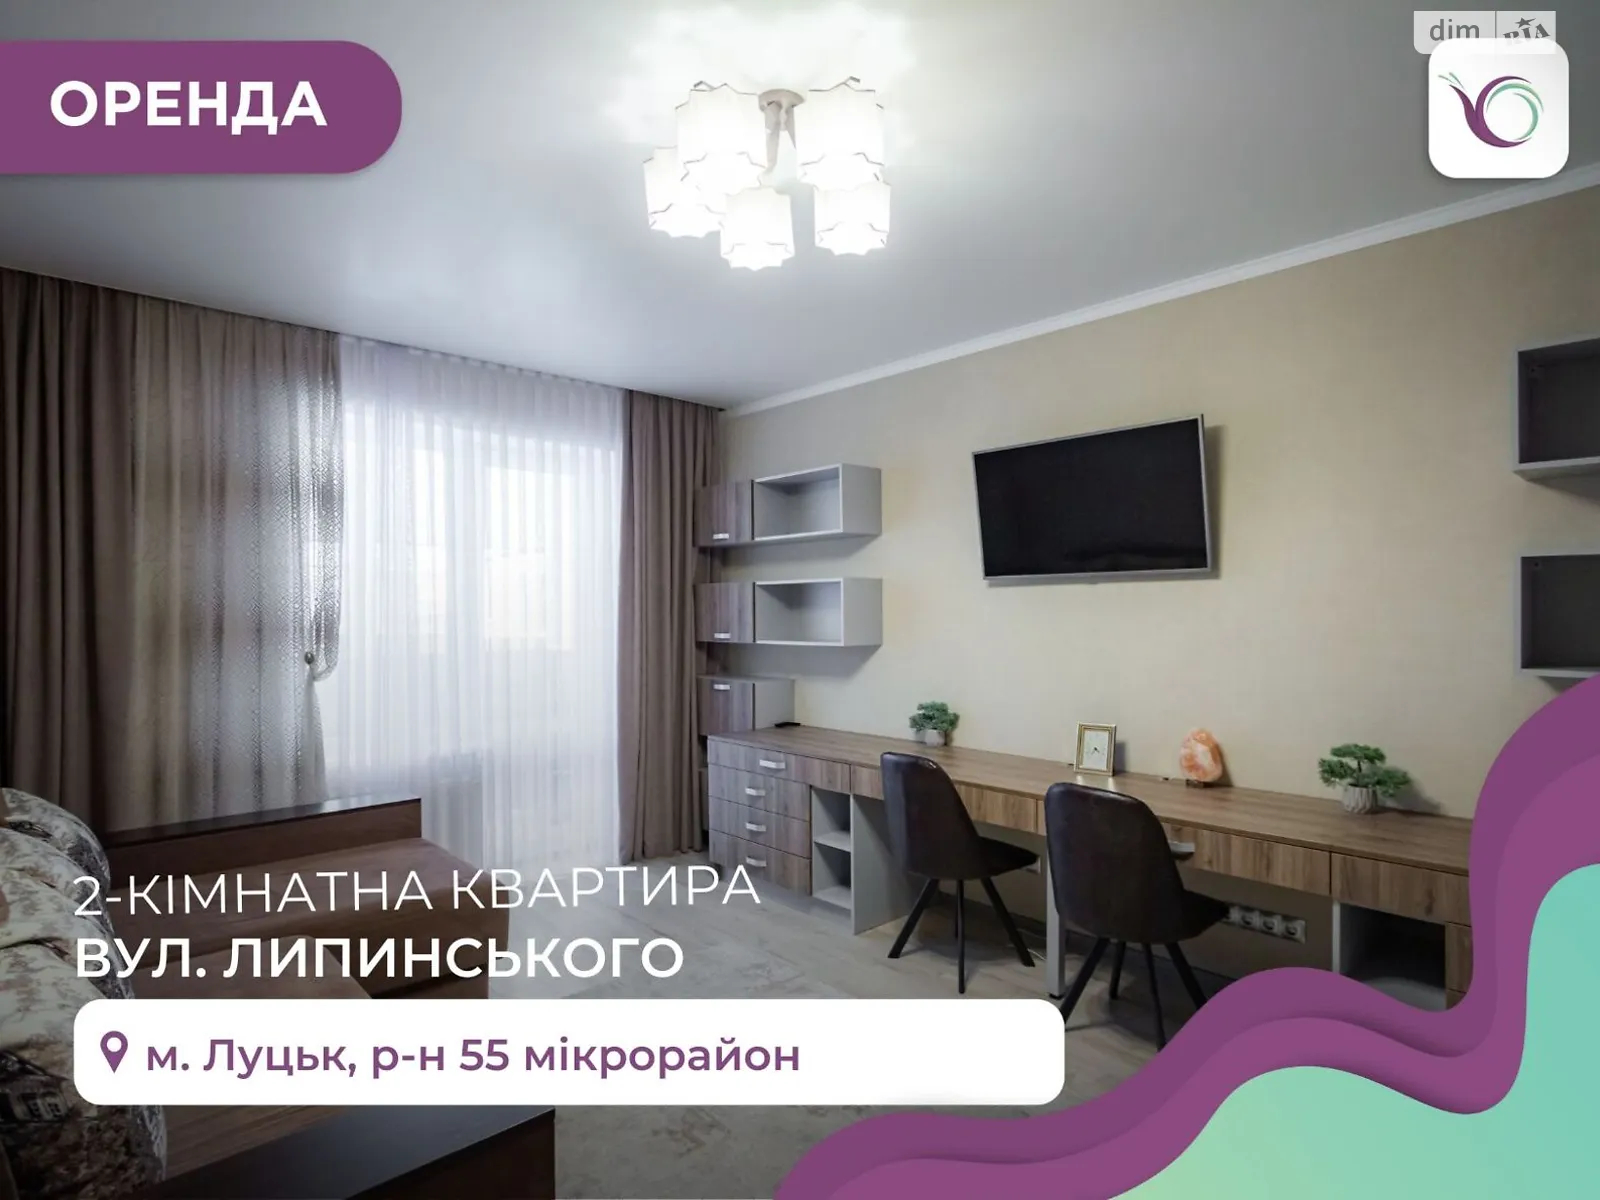 2-кімнатна квартира 66.3 кв. м у Луцьку, цена: 500 $ - фото 1